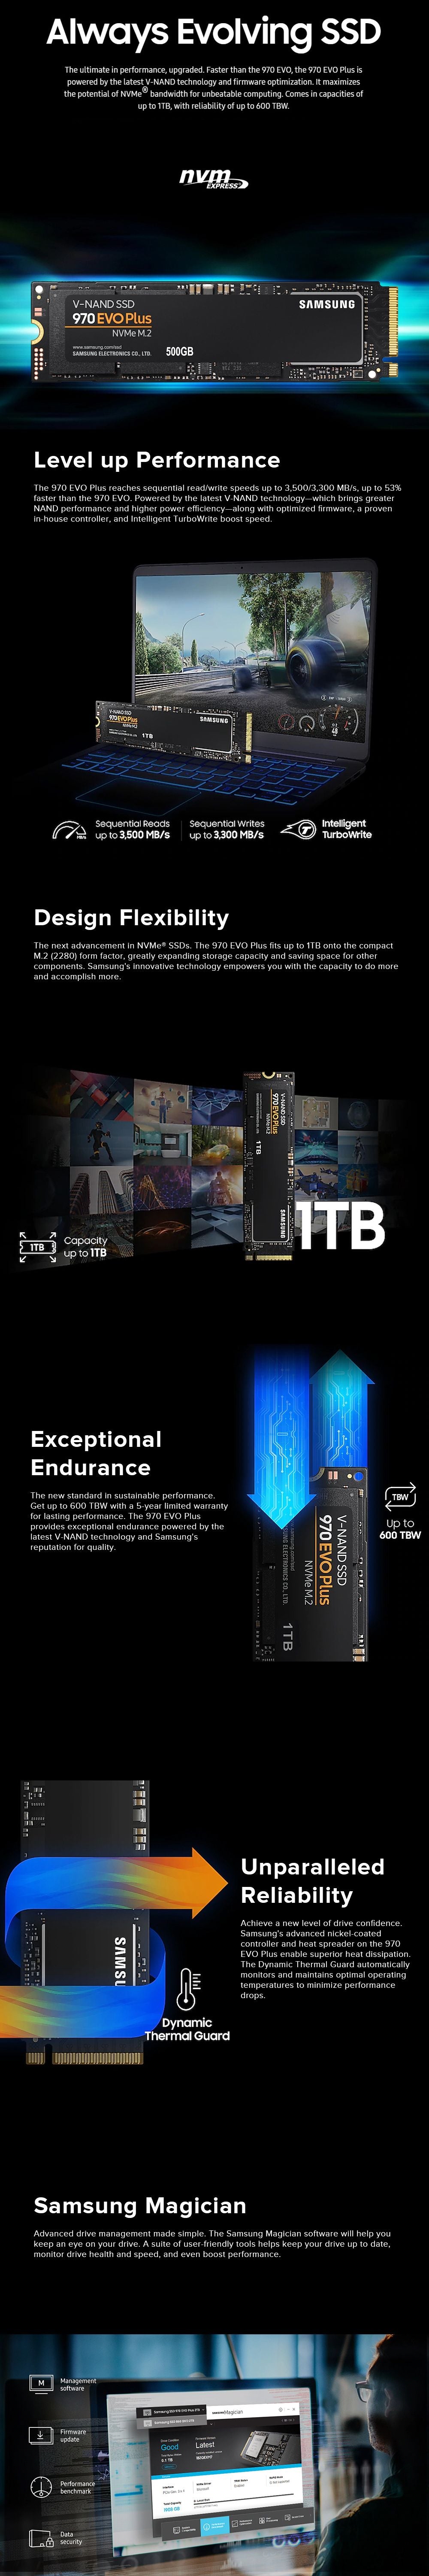 Samsung 970 EVO 1 TB Specs